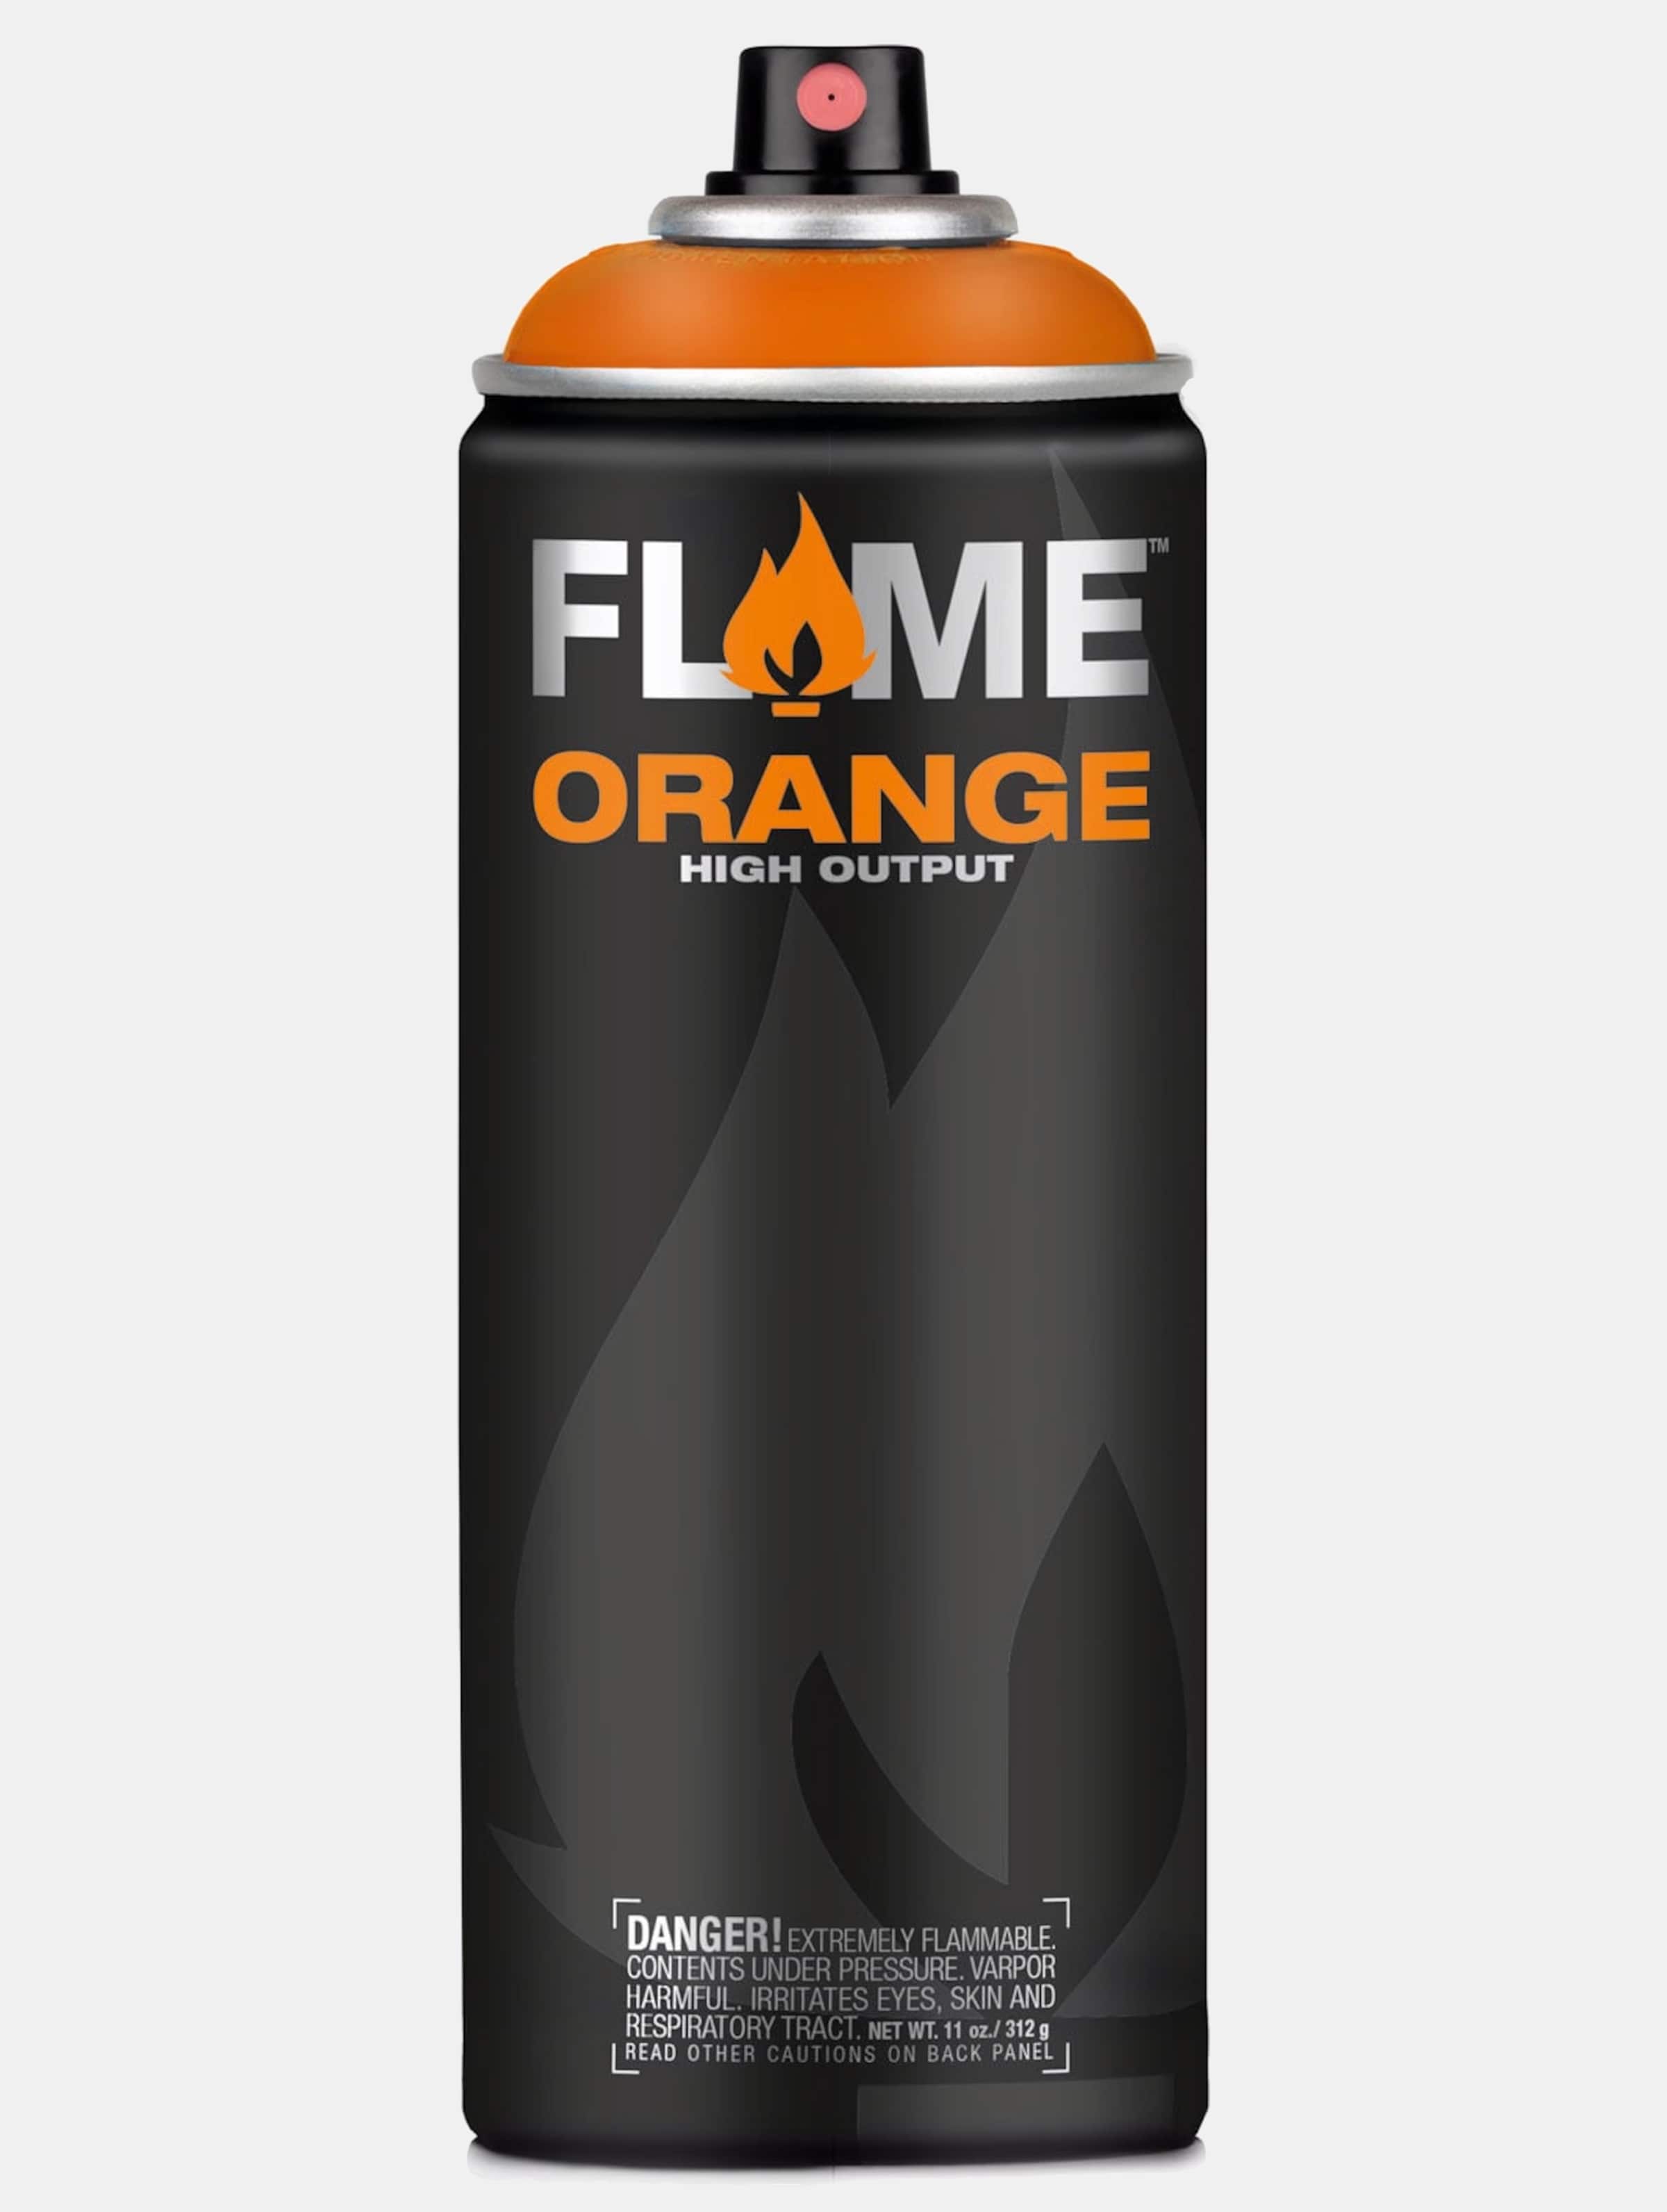 Molotow Flame Orange - Spray Paint - Spuitbus verf - Synthetisch - Hoge druk - Matte afwerking - 400 ml - beige brown